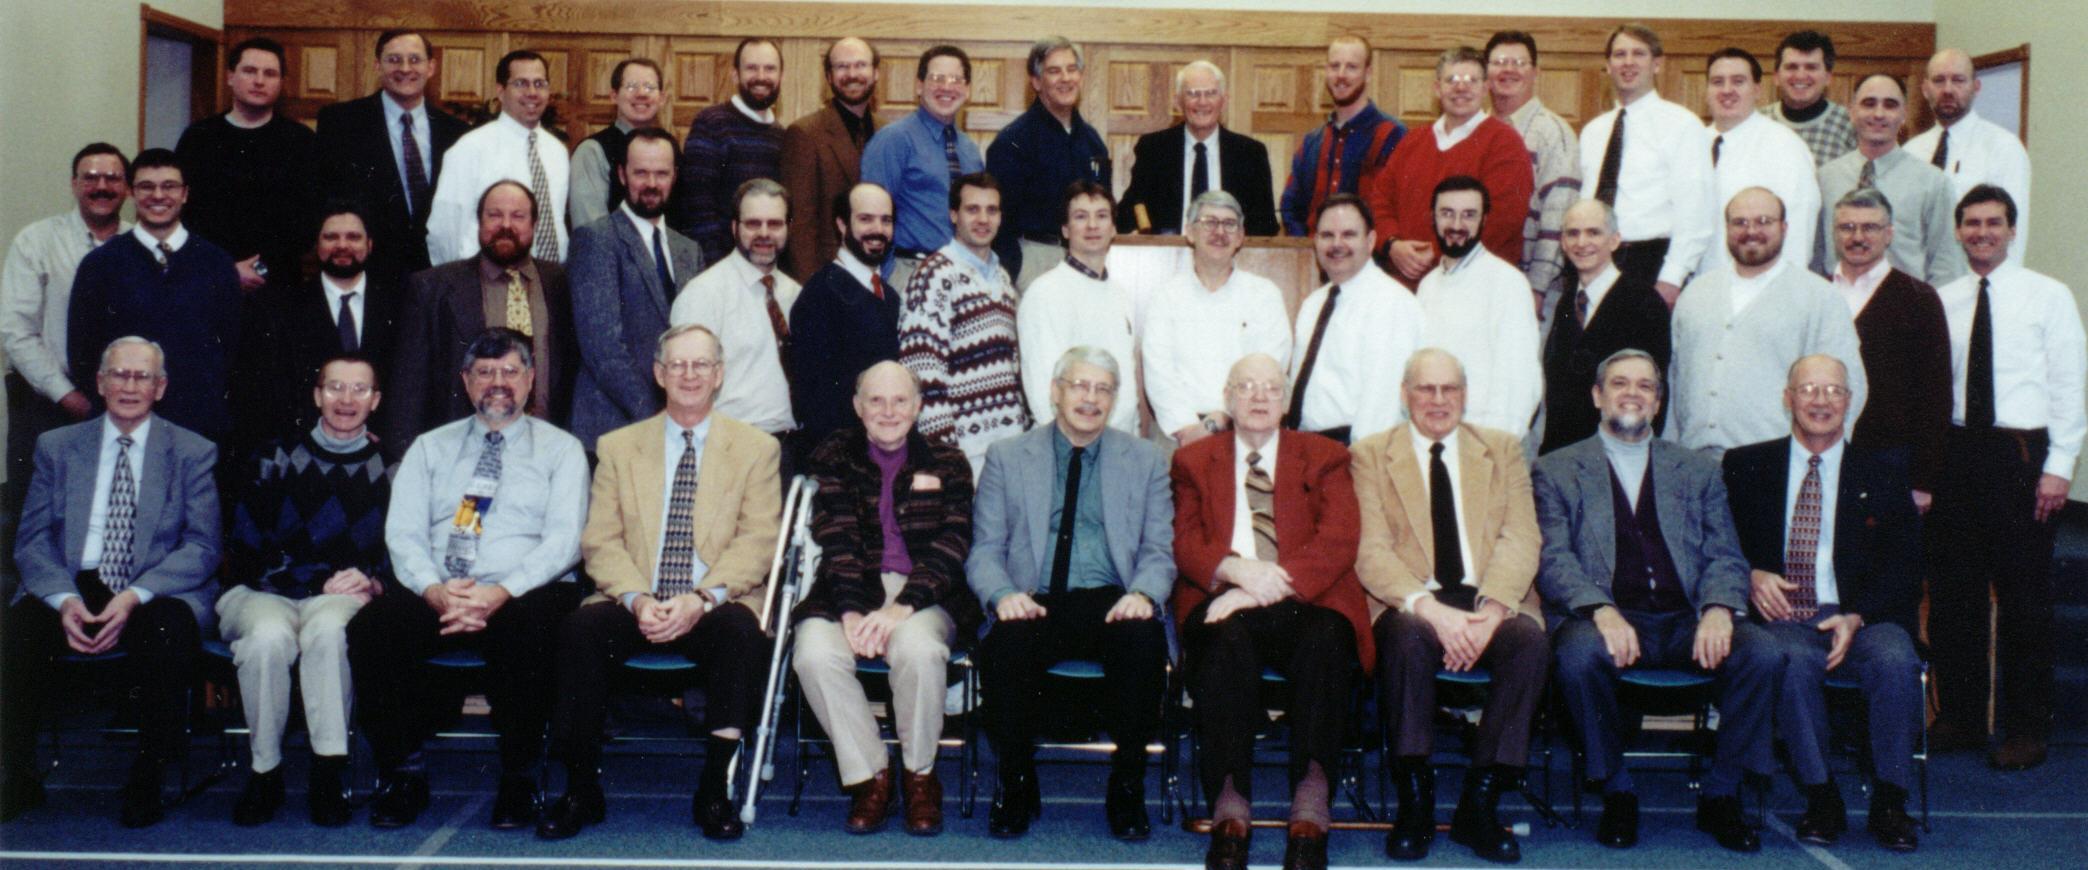 Presbytery of Michigan and Ohio, 1-21-2000